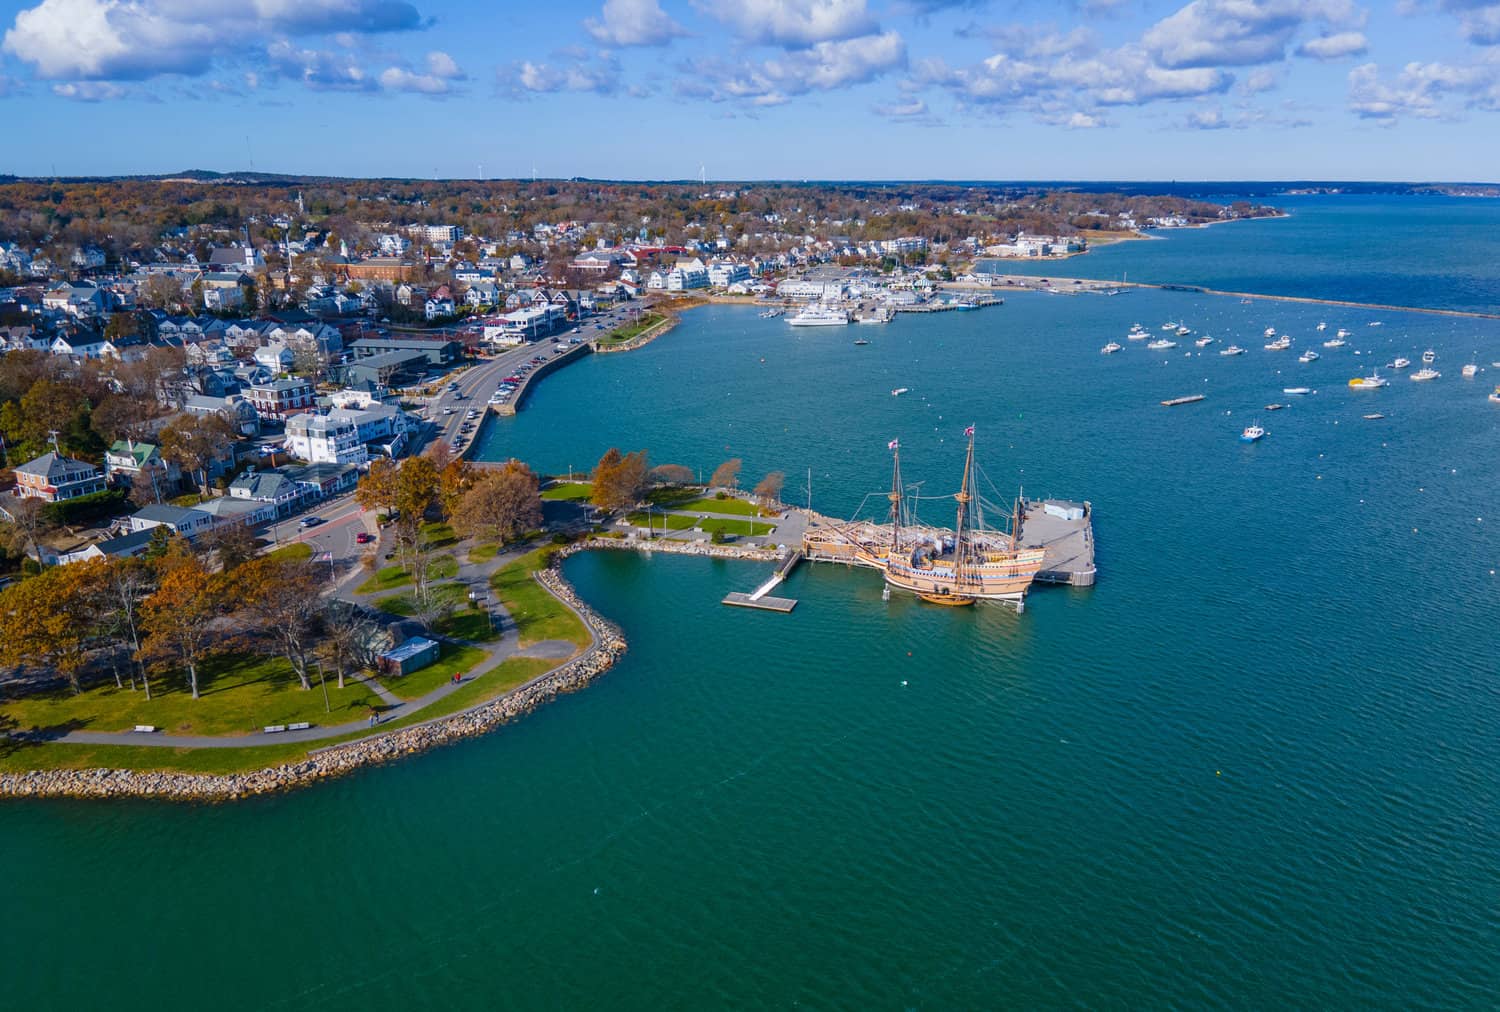 Plymouth, Massachusetts